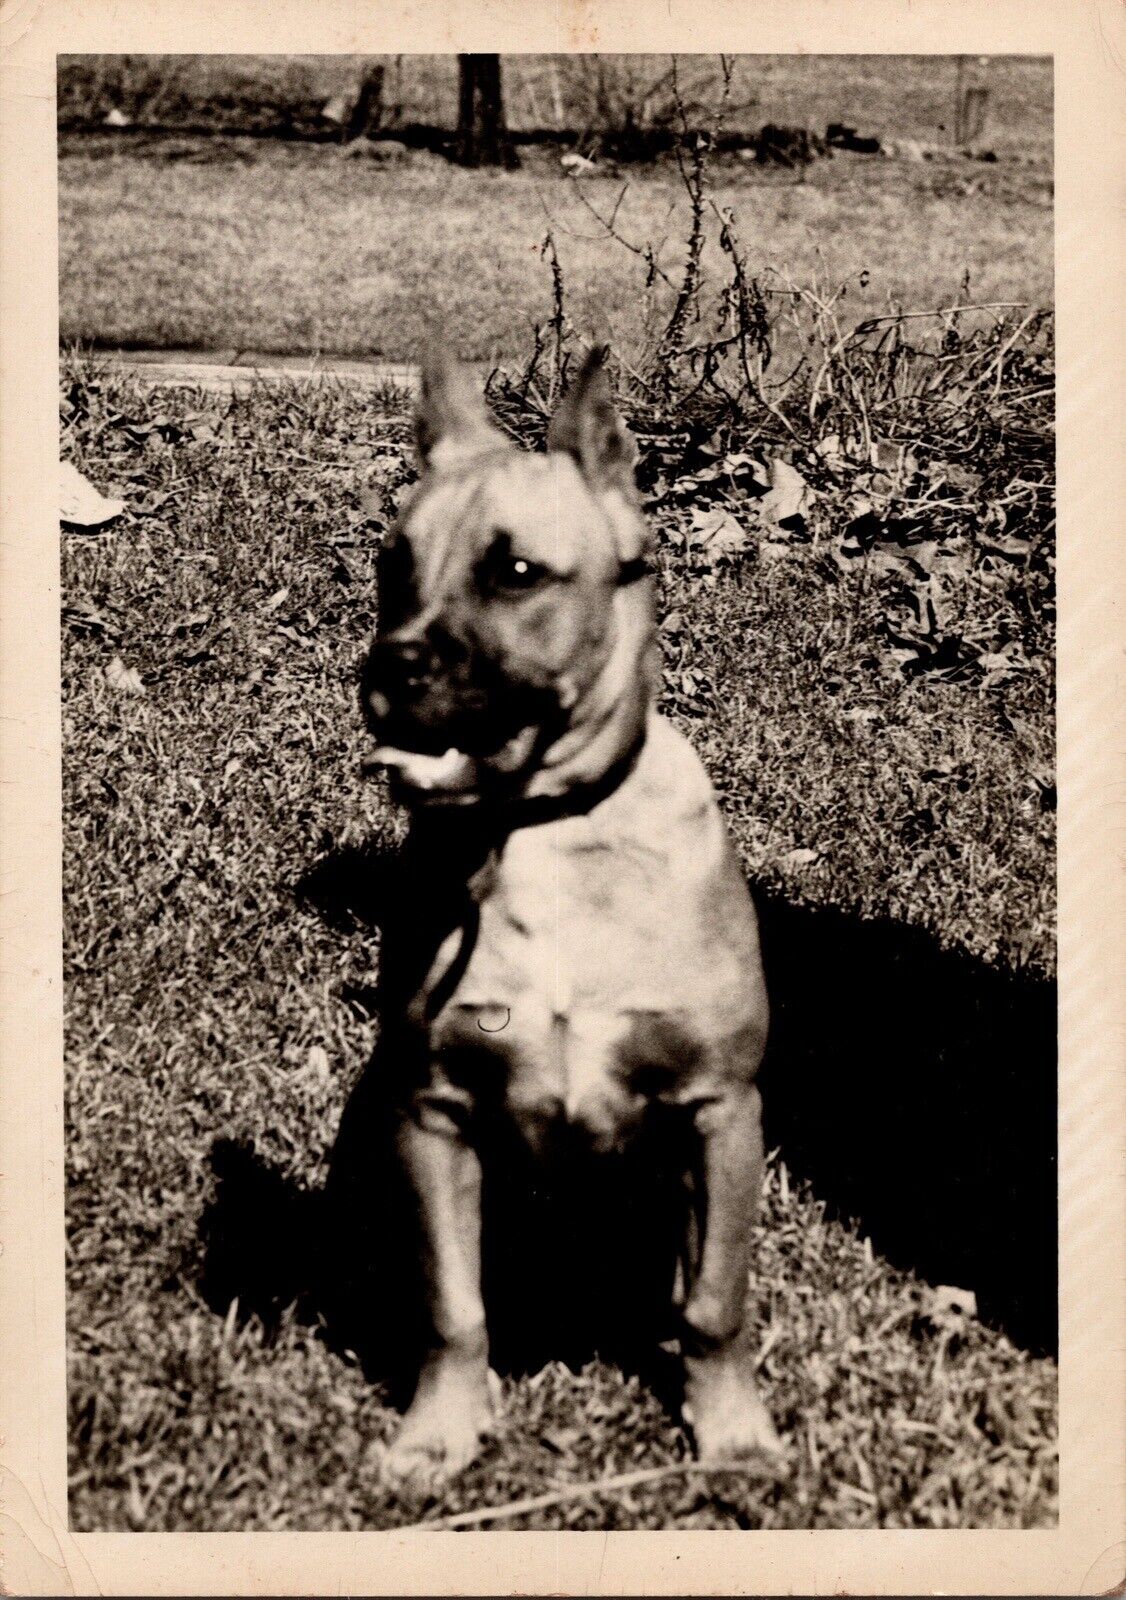 Vtg Found B&W Photo 1950 Dog Pet Retro Animal Canine Outdoors K9